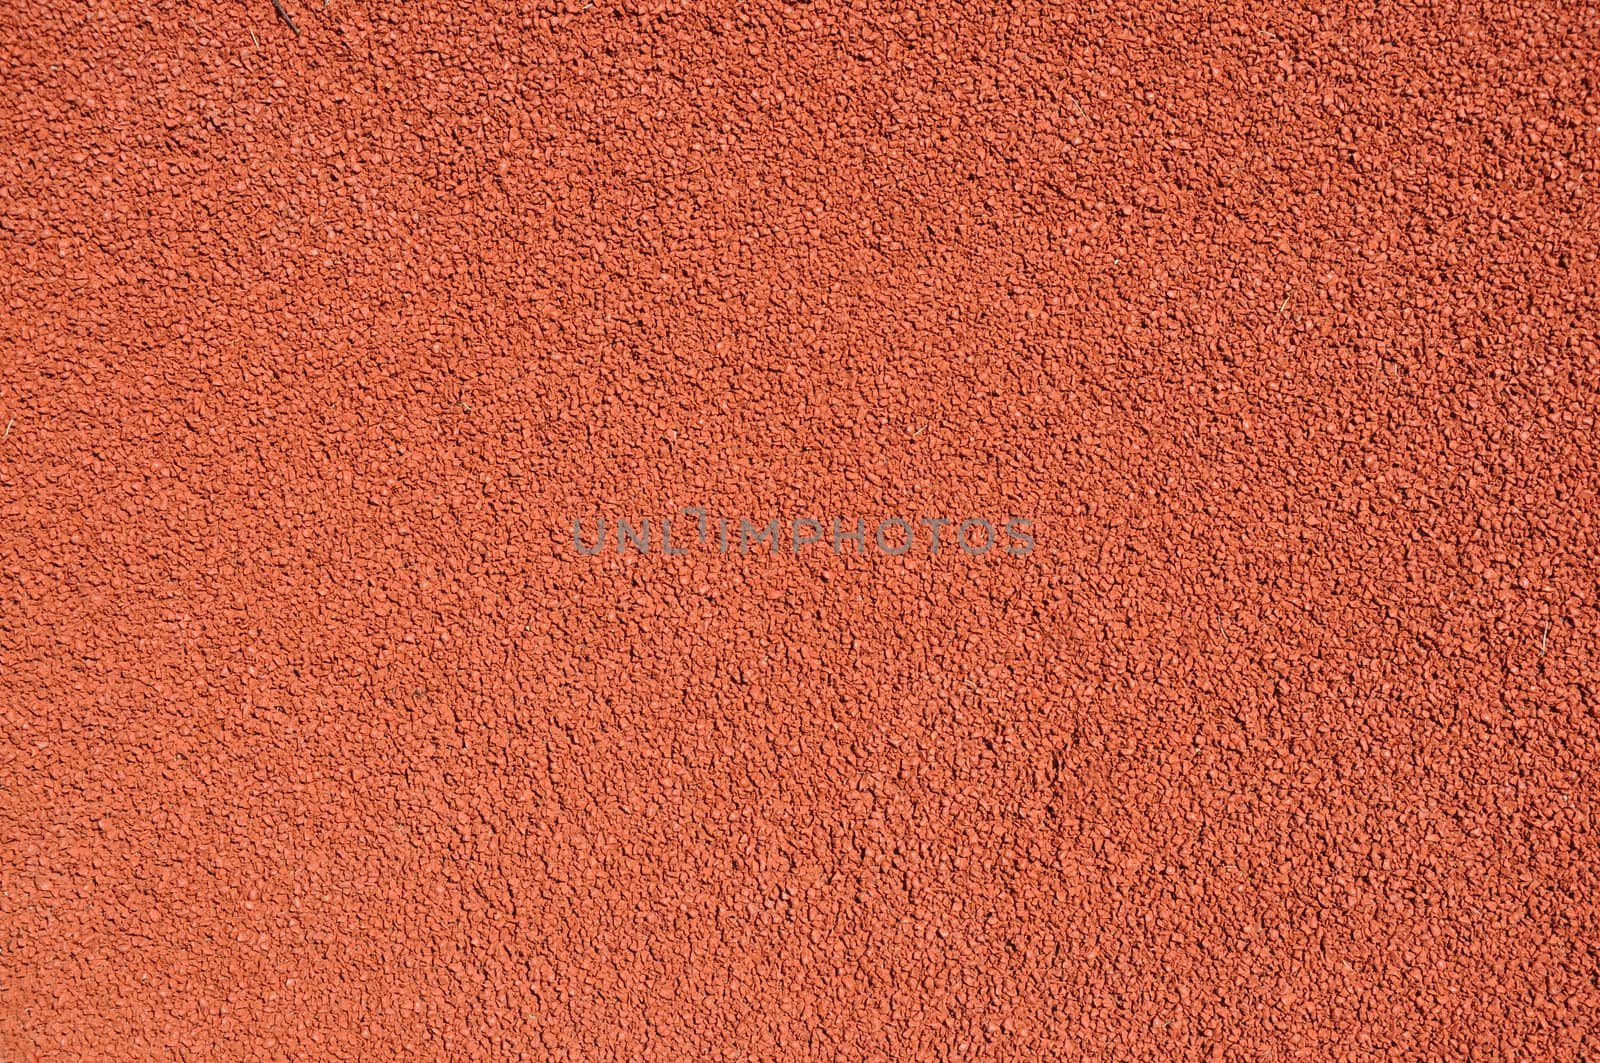 Reddish brown gravel for background use.